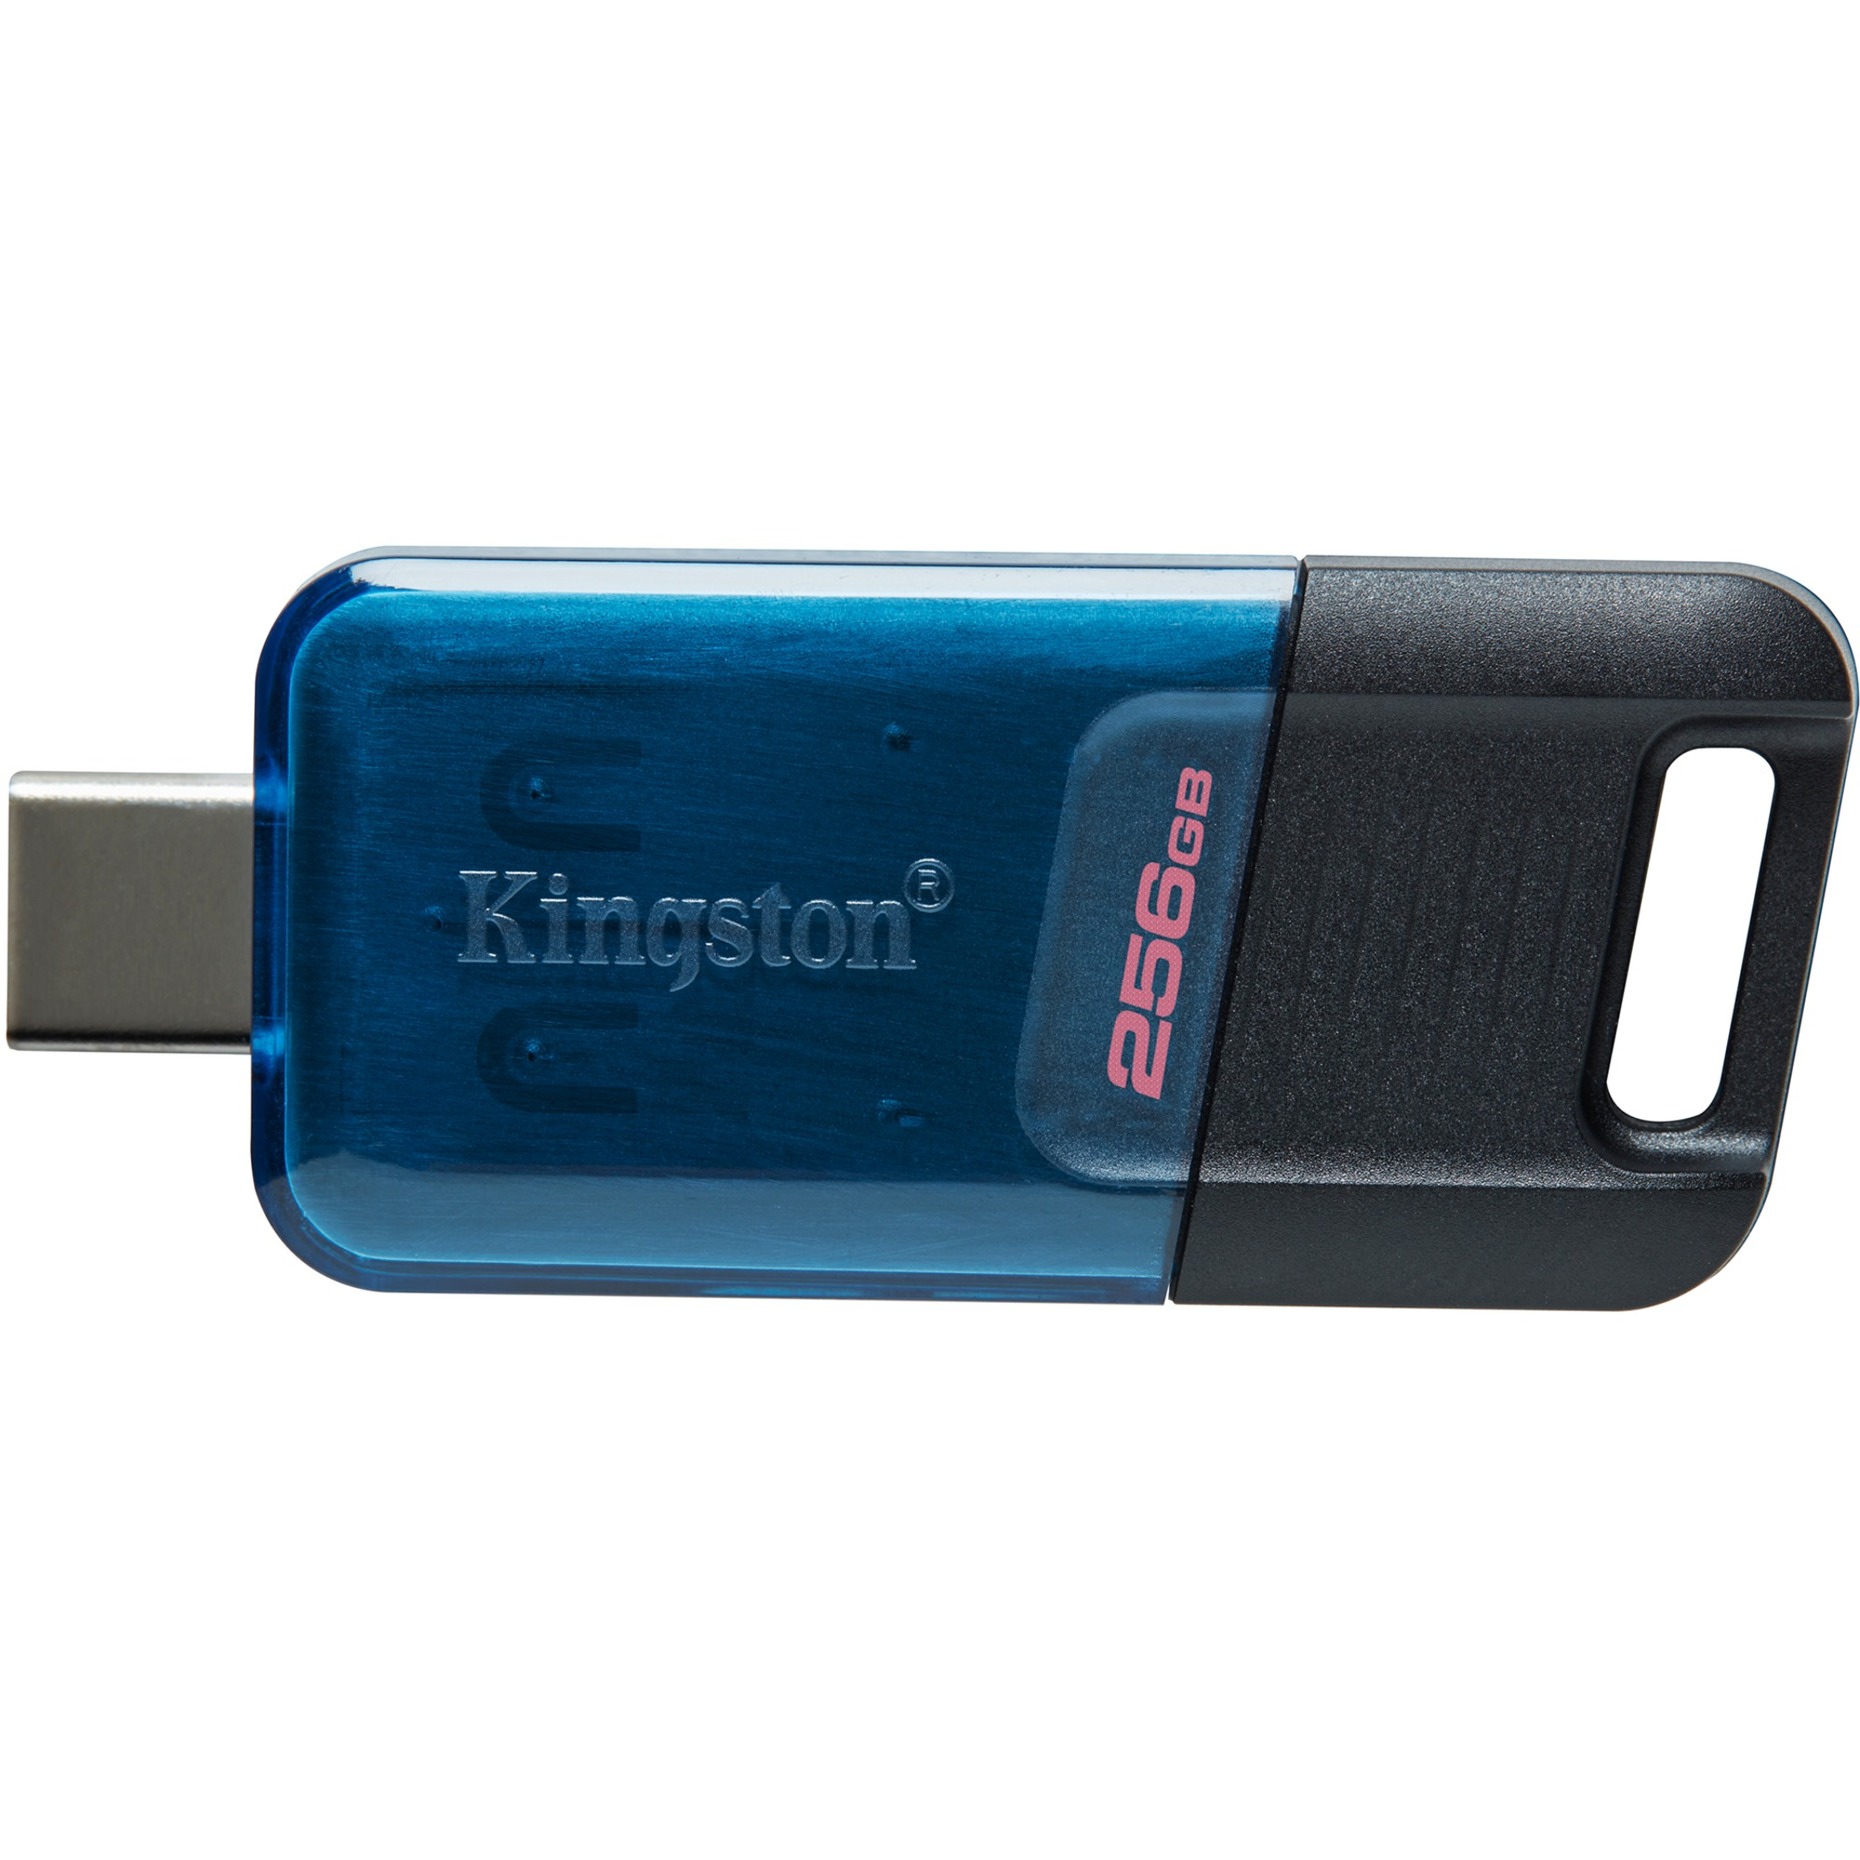 DataTraveler 80 M 256 GB, USB-Stick von Kingston